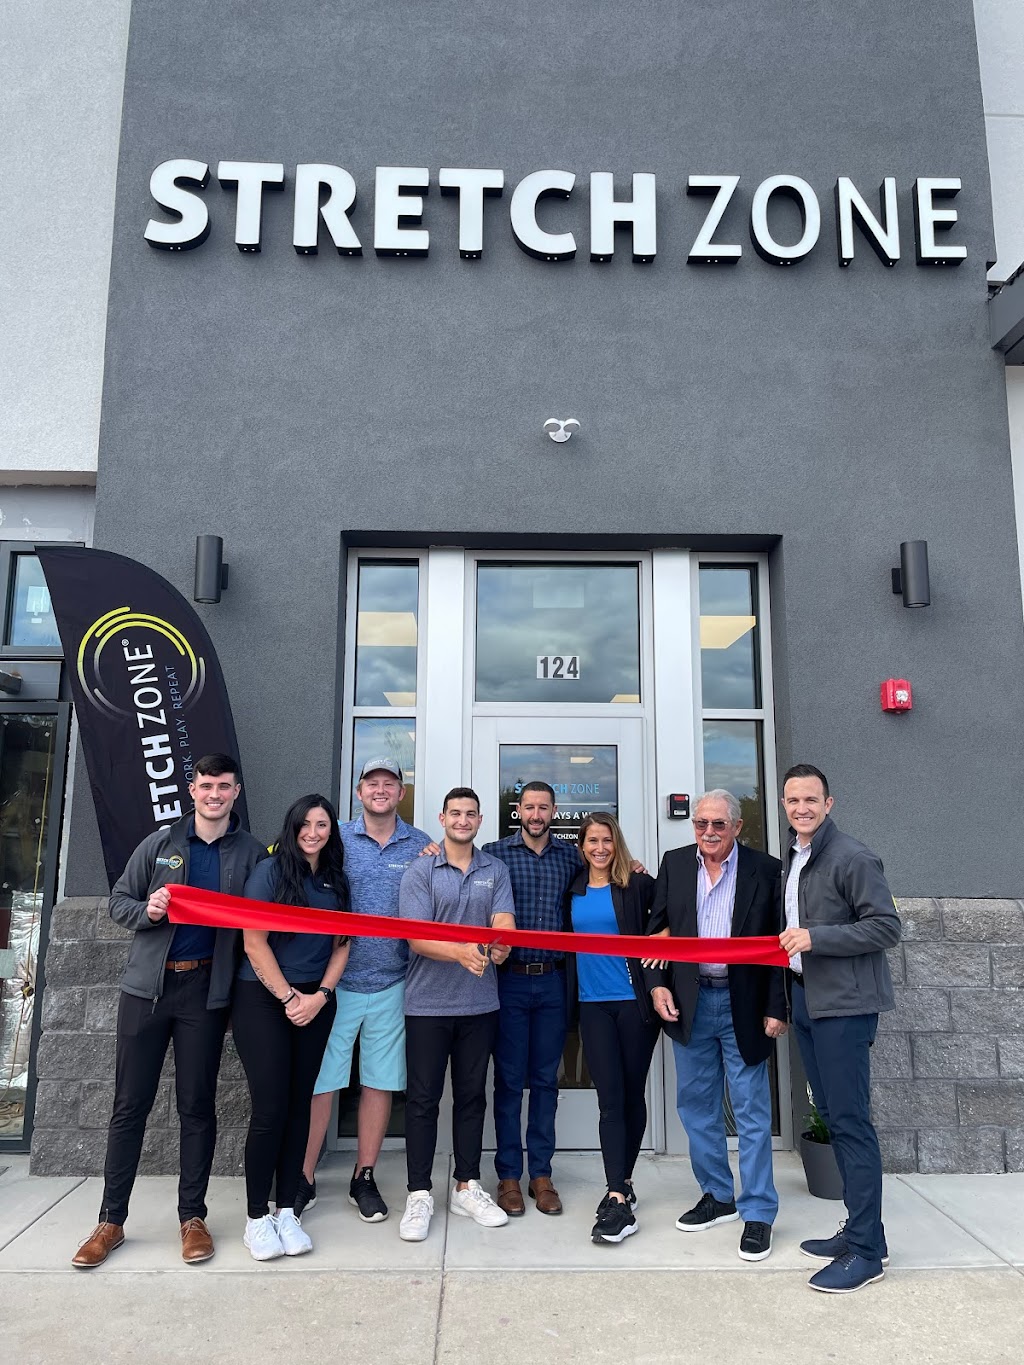 Stretch Zone | 124 E Street Rd, Feasterville-Trevose, PA 19053 | Phone: (215) 322-2418